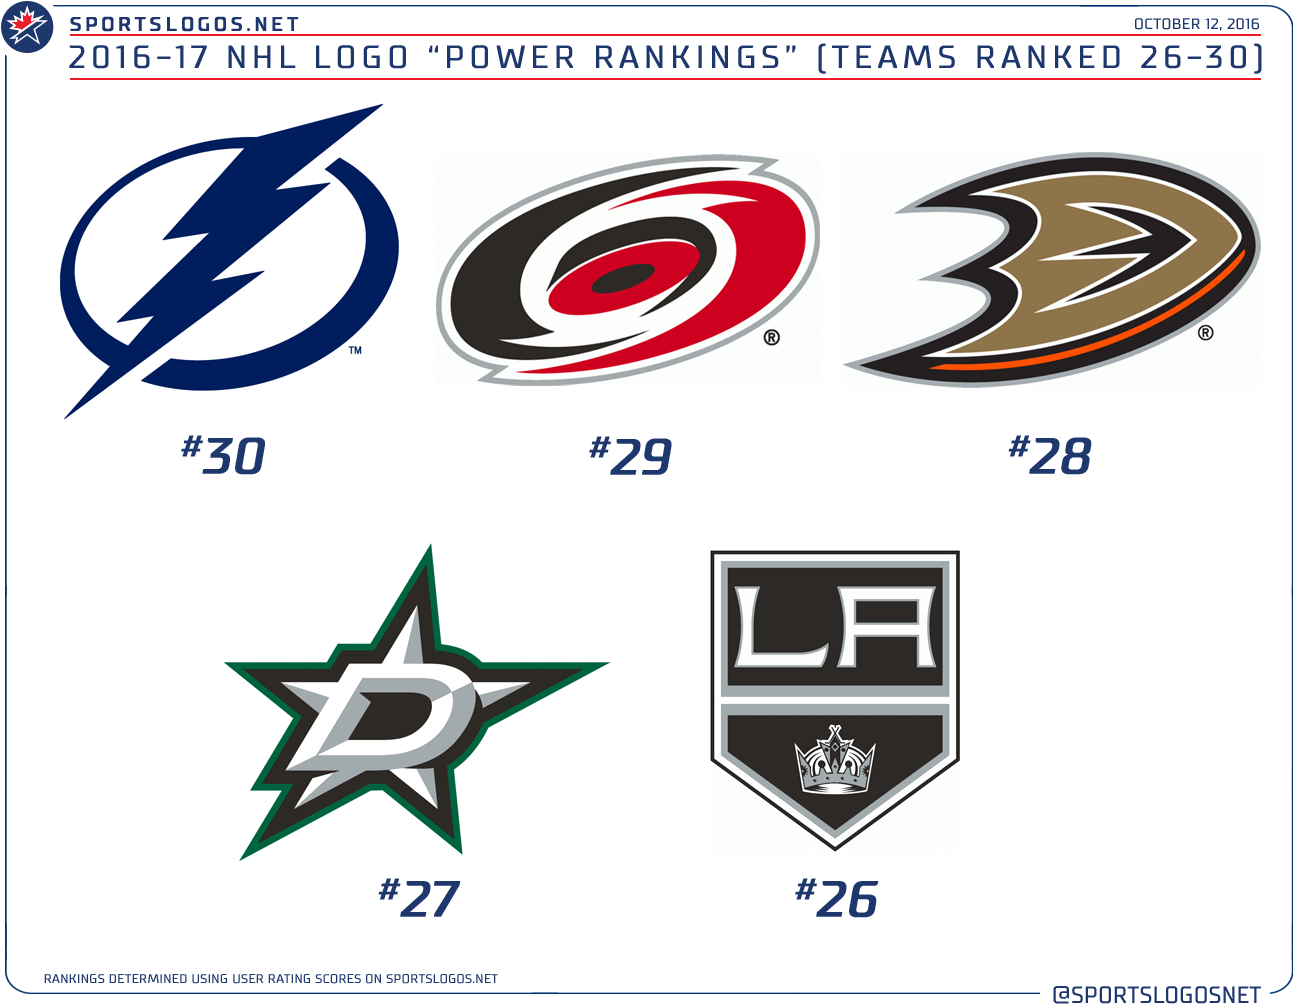 Логотипы команд нхл. Значки хоккейных команд НХЛ. Хоккейные клубы НХЛ. Эмблемы хоккейных клубов НХЛ. Хоккейная команда NHL логотипы.